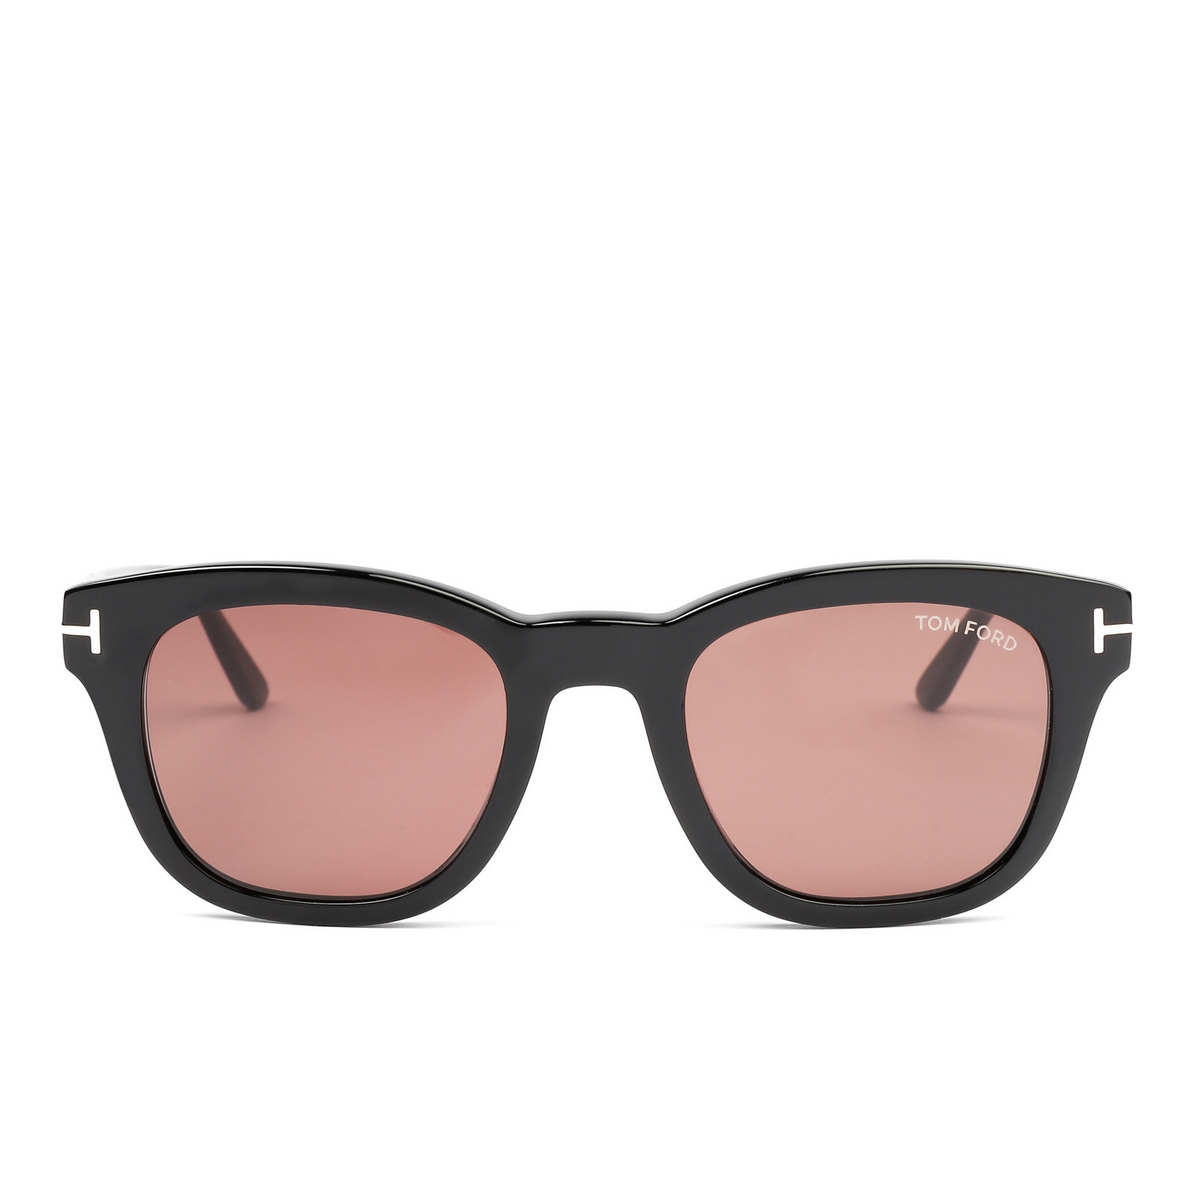 Tom Ford EUGENIO Sunglasses 01E Shiny Black - front view